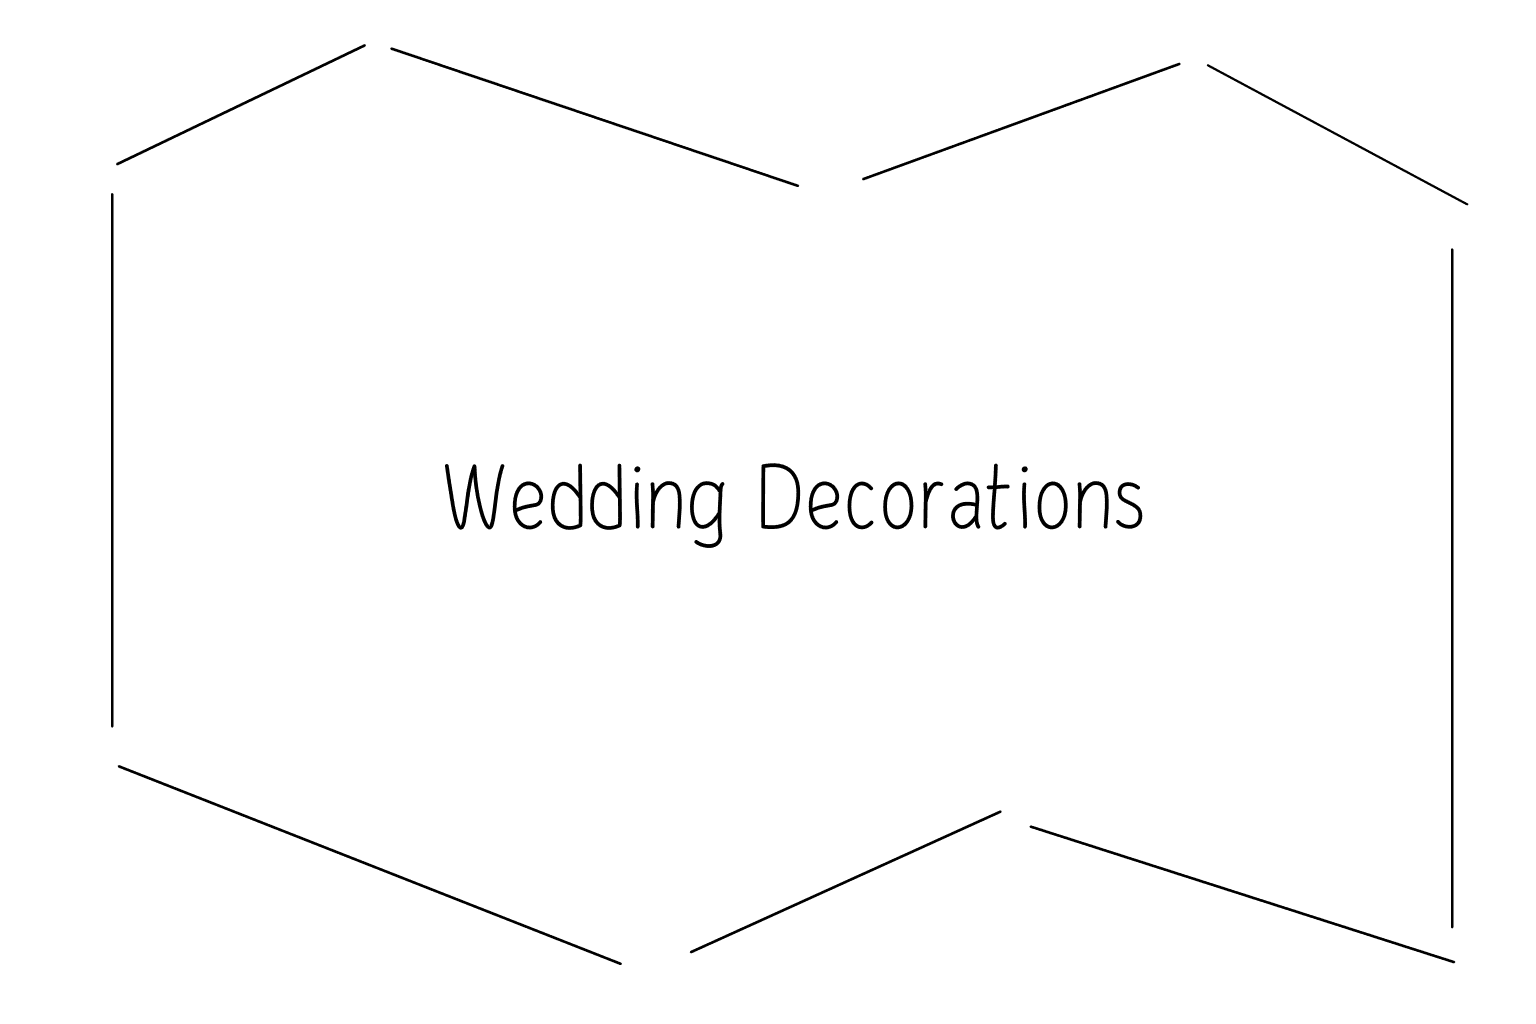 Illustration of Wedding Decor